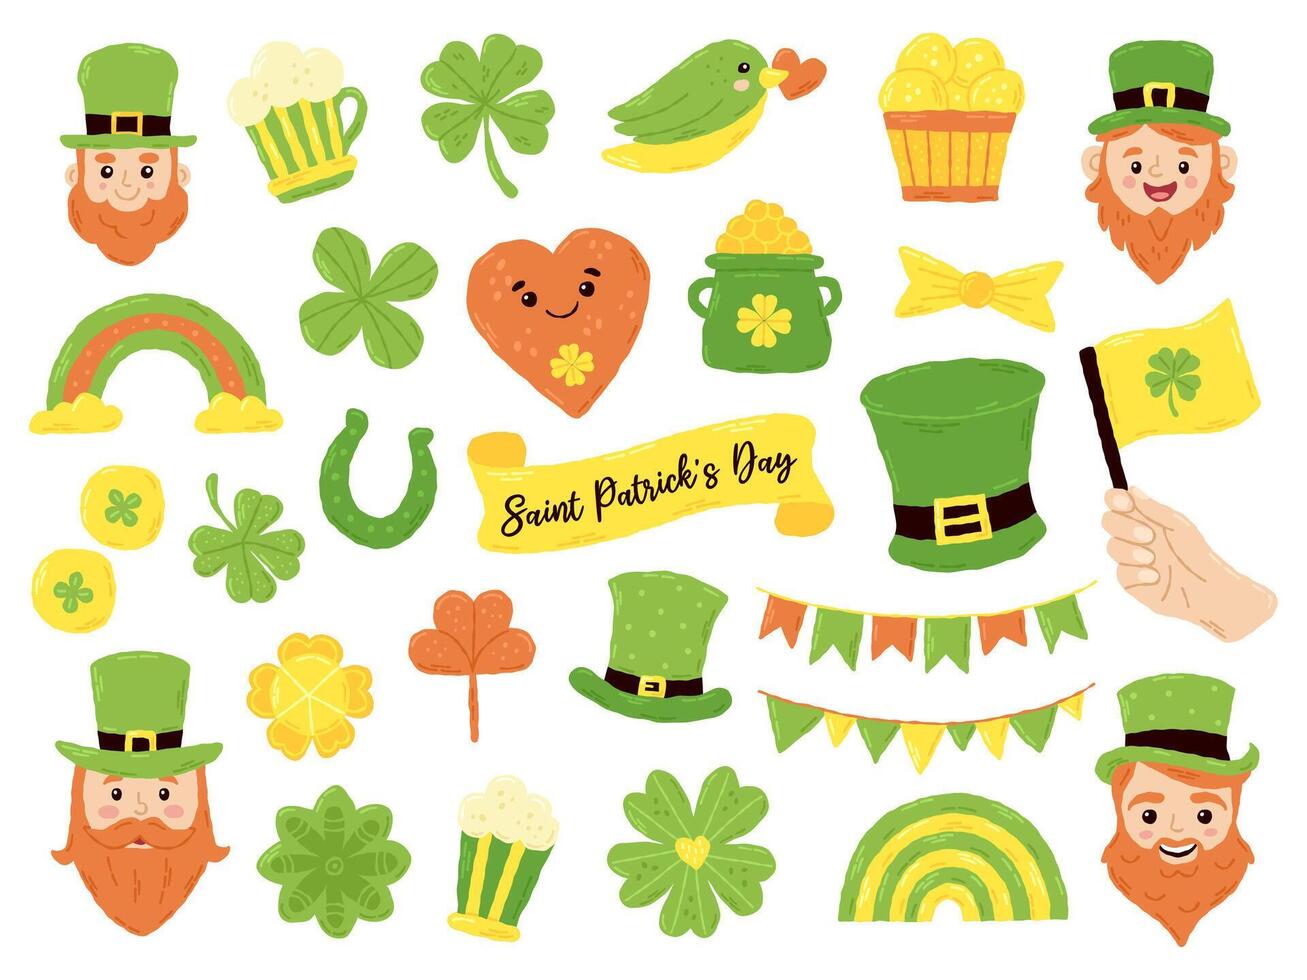 Festive set for St. Patrick's Day. clover, ireland, shamrock, beer, flag, leprechaun, gnome. Hand drawn flat cartoon elements. Vector illustration